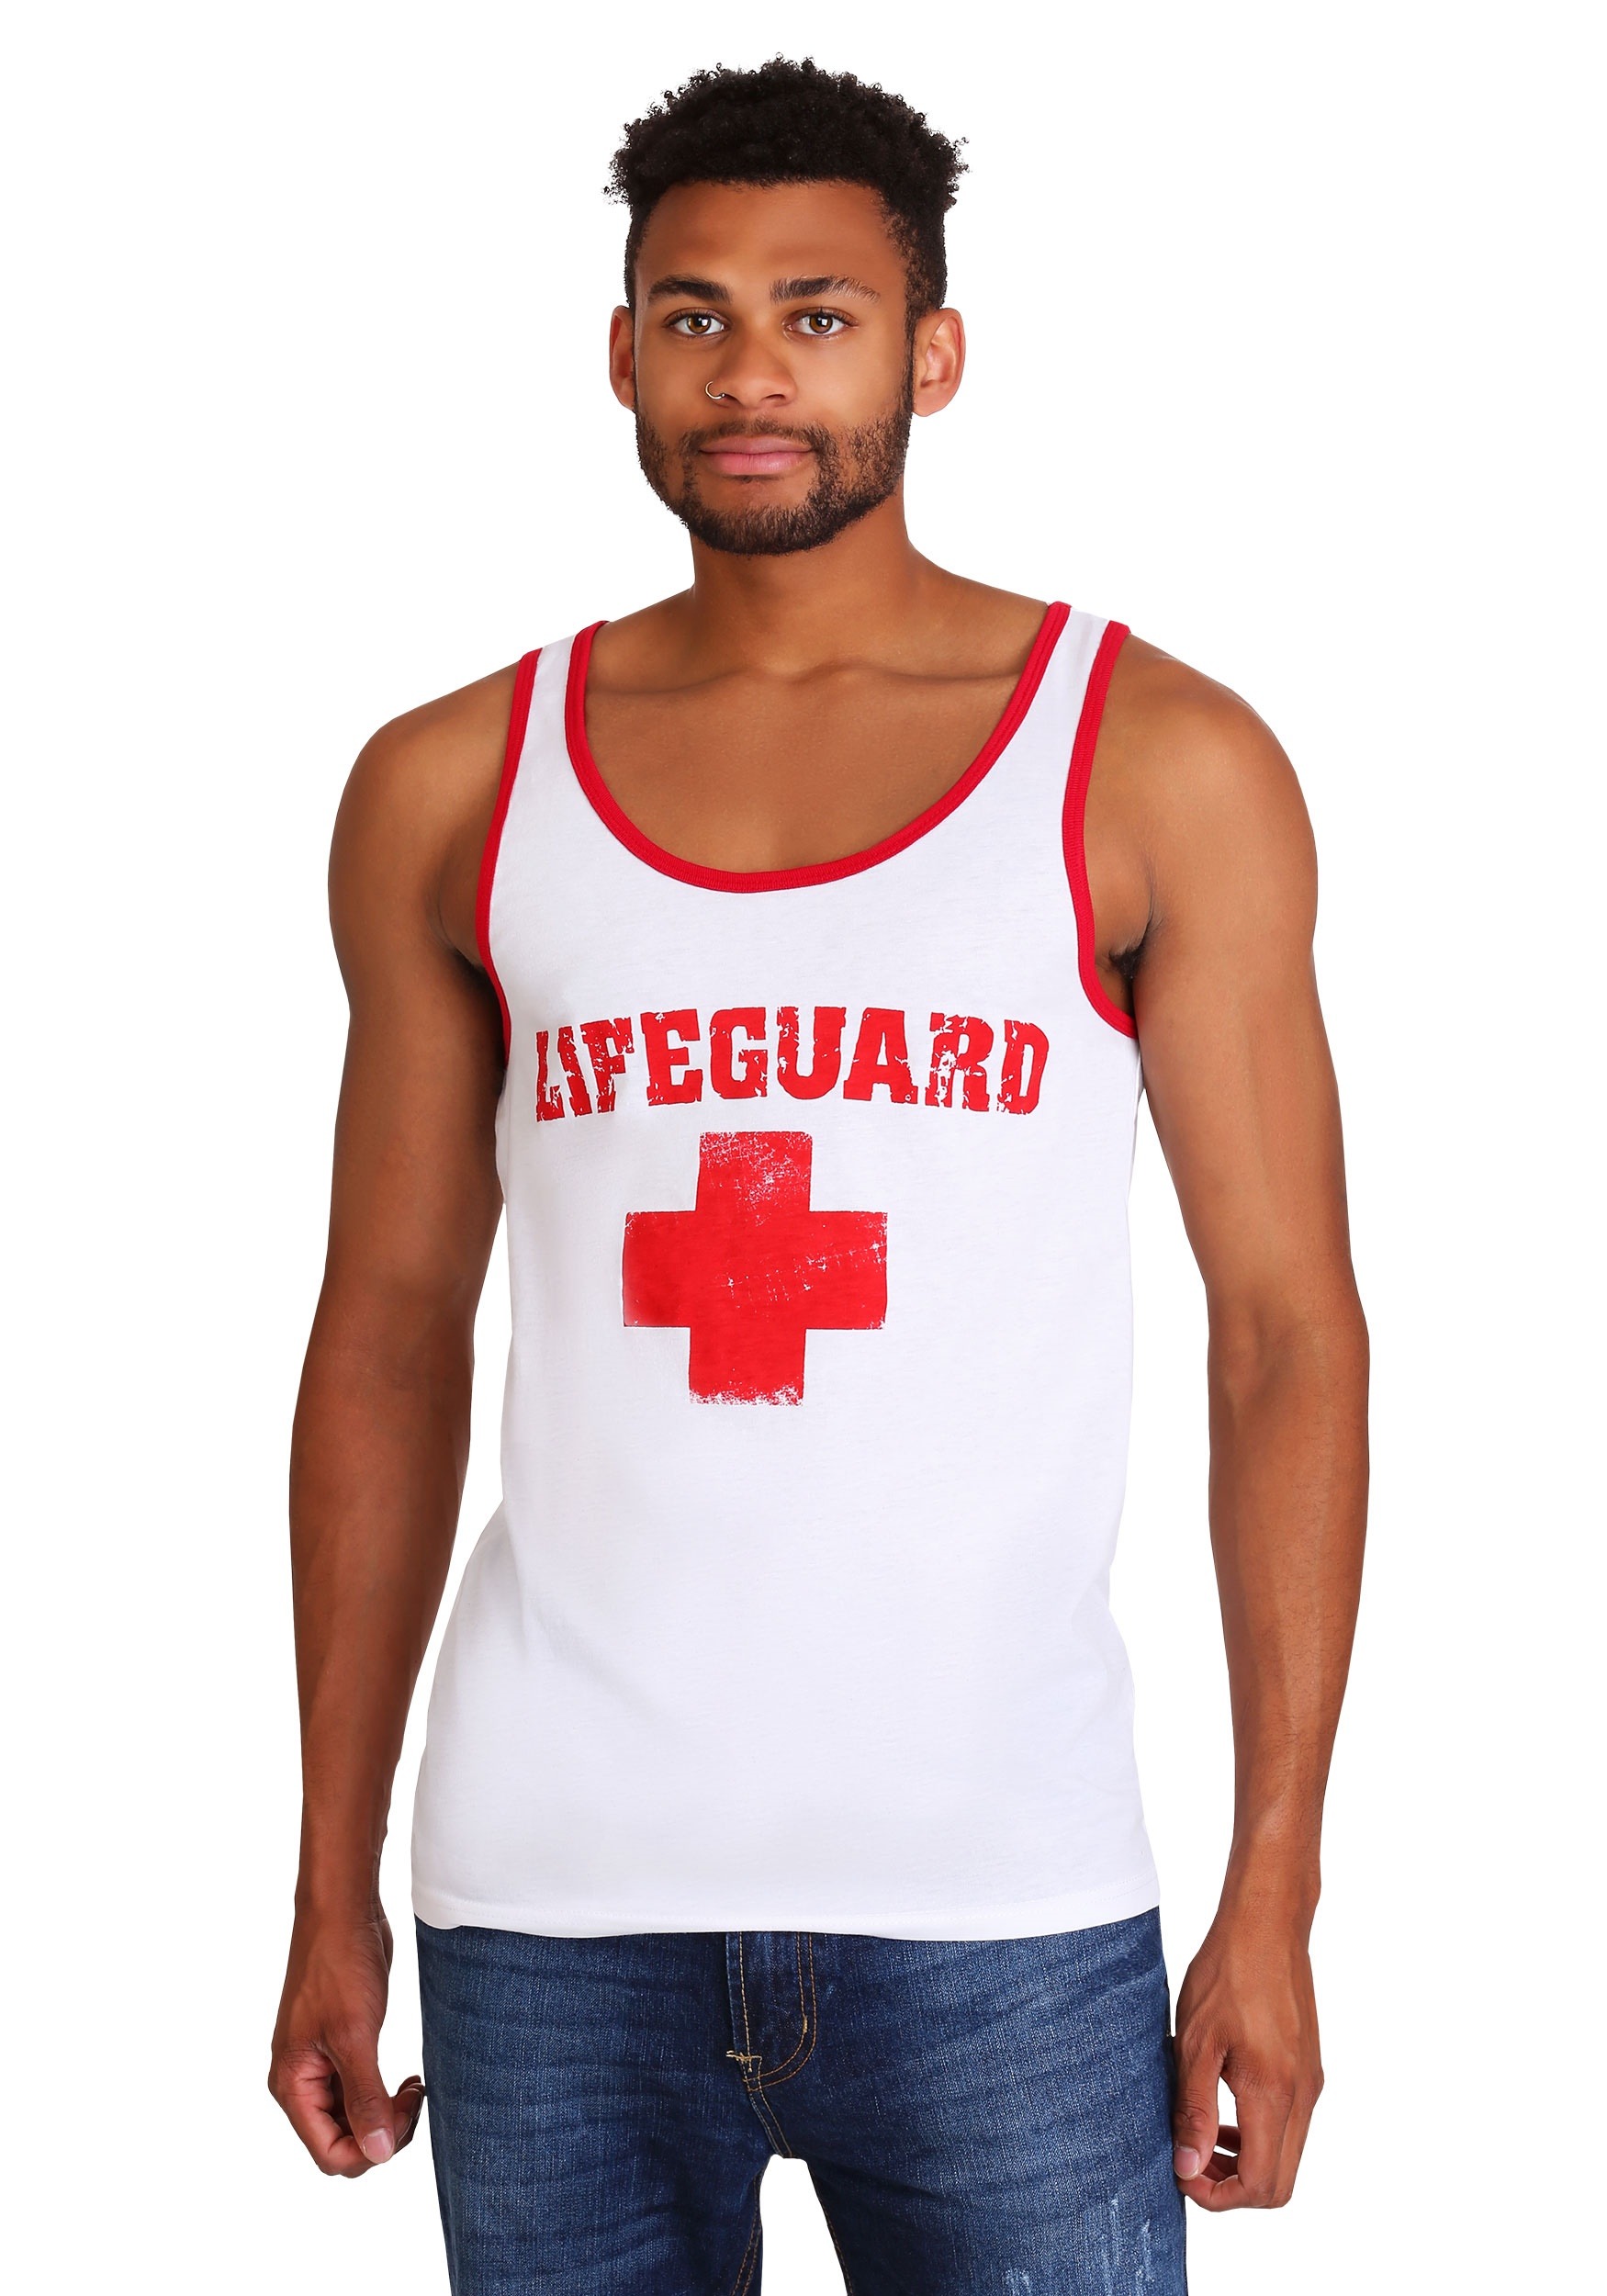 Lifeguard Red Adult Lifeguarding Uniform Costume Unisex Tank Top Men Women 